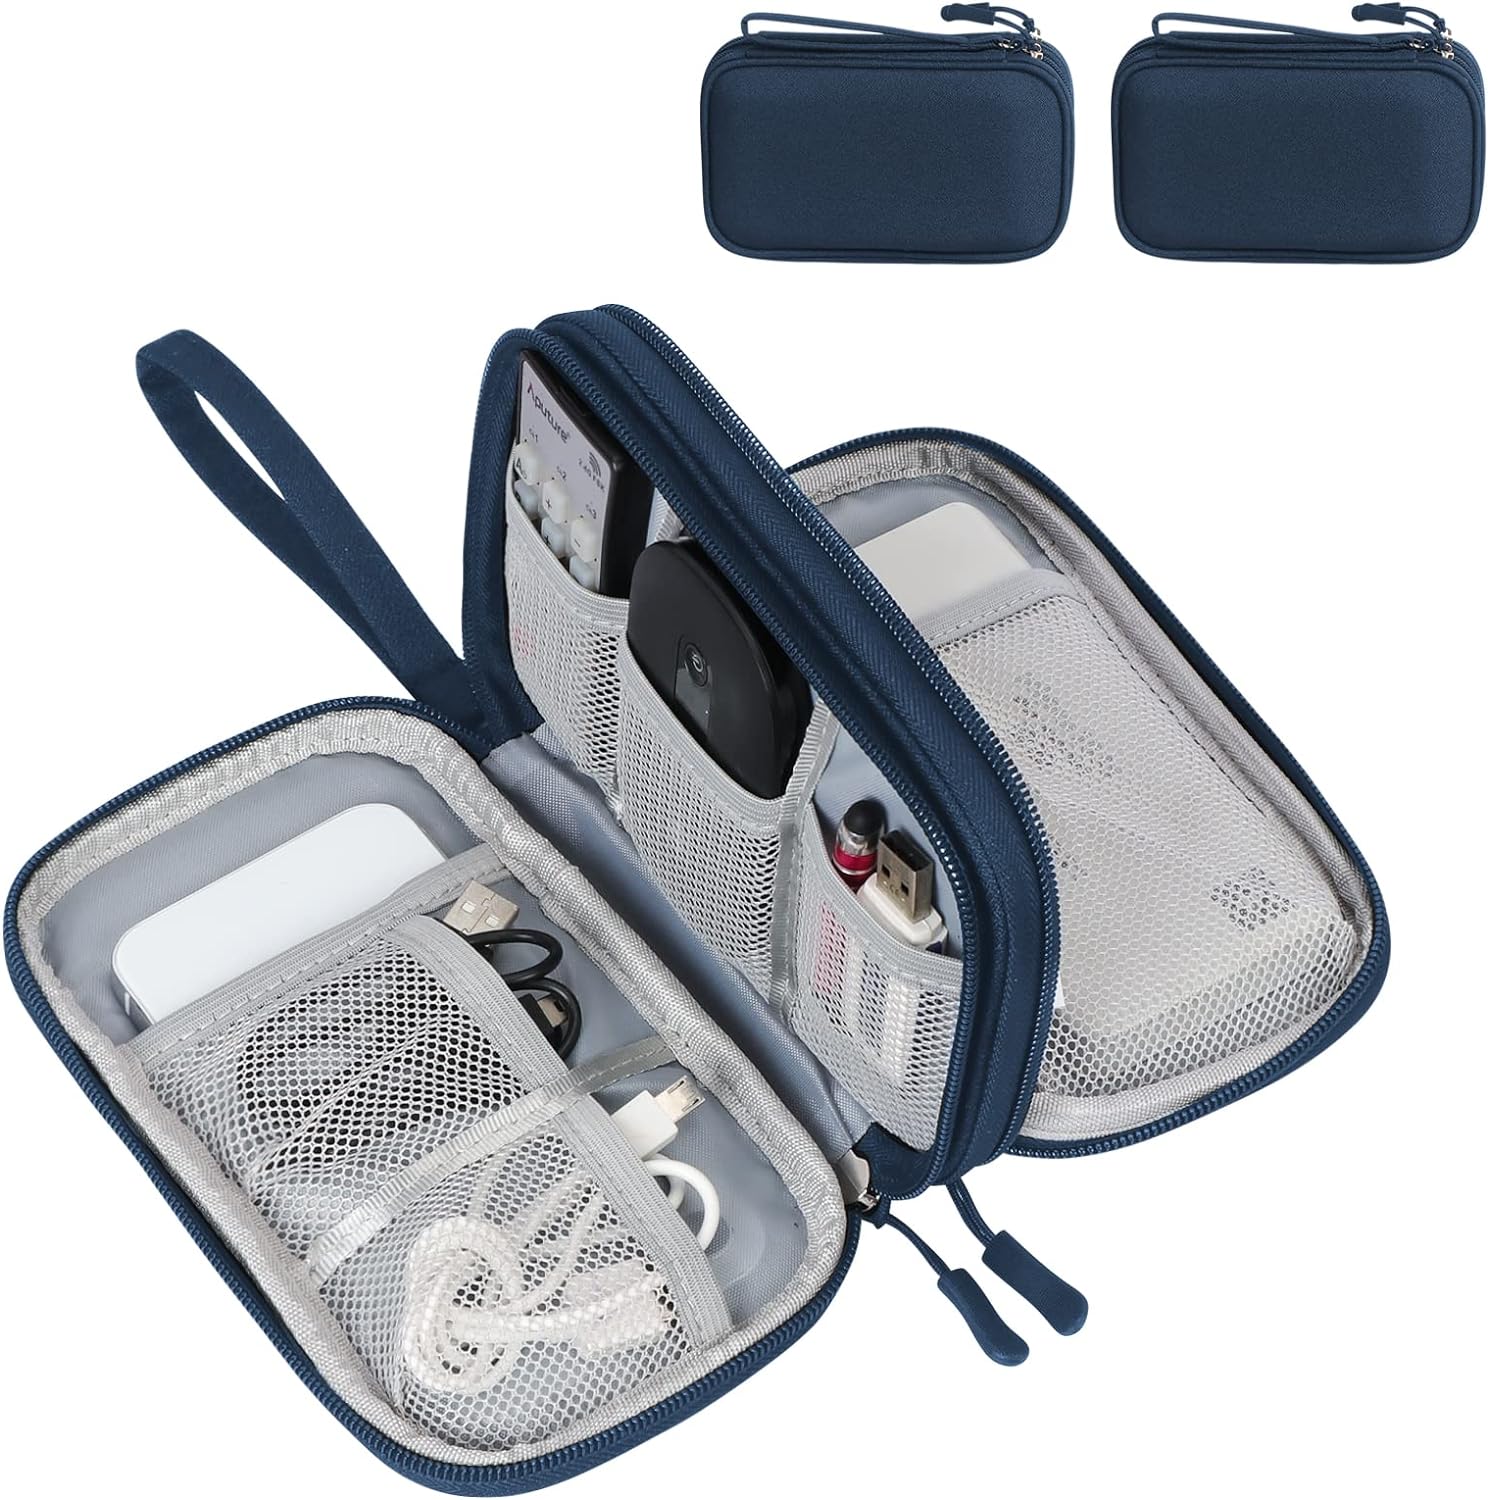 Portable Waterproof Double Layers Storage Bag para sa Cable, Charger, Atbp.